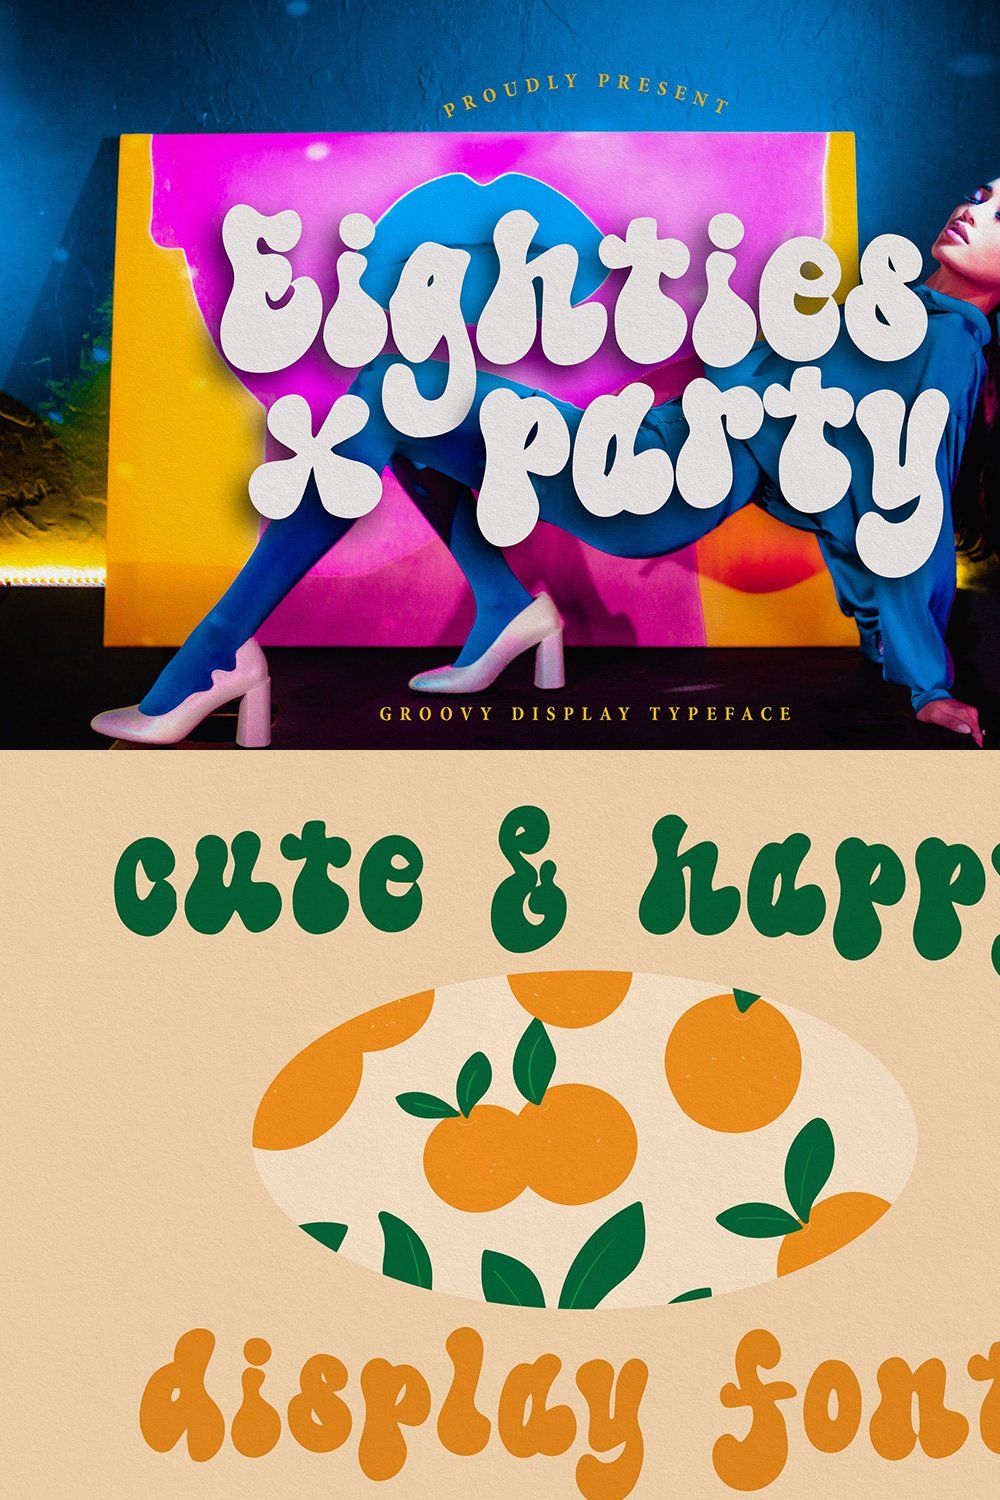 Eighties Party - Bubble Retro Font pinterest preview image.